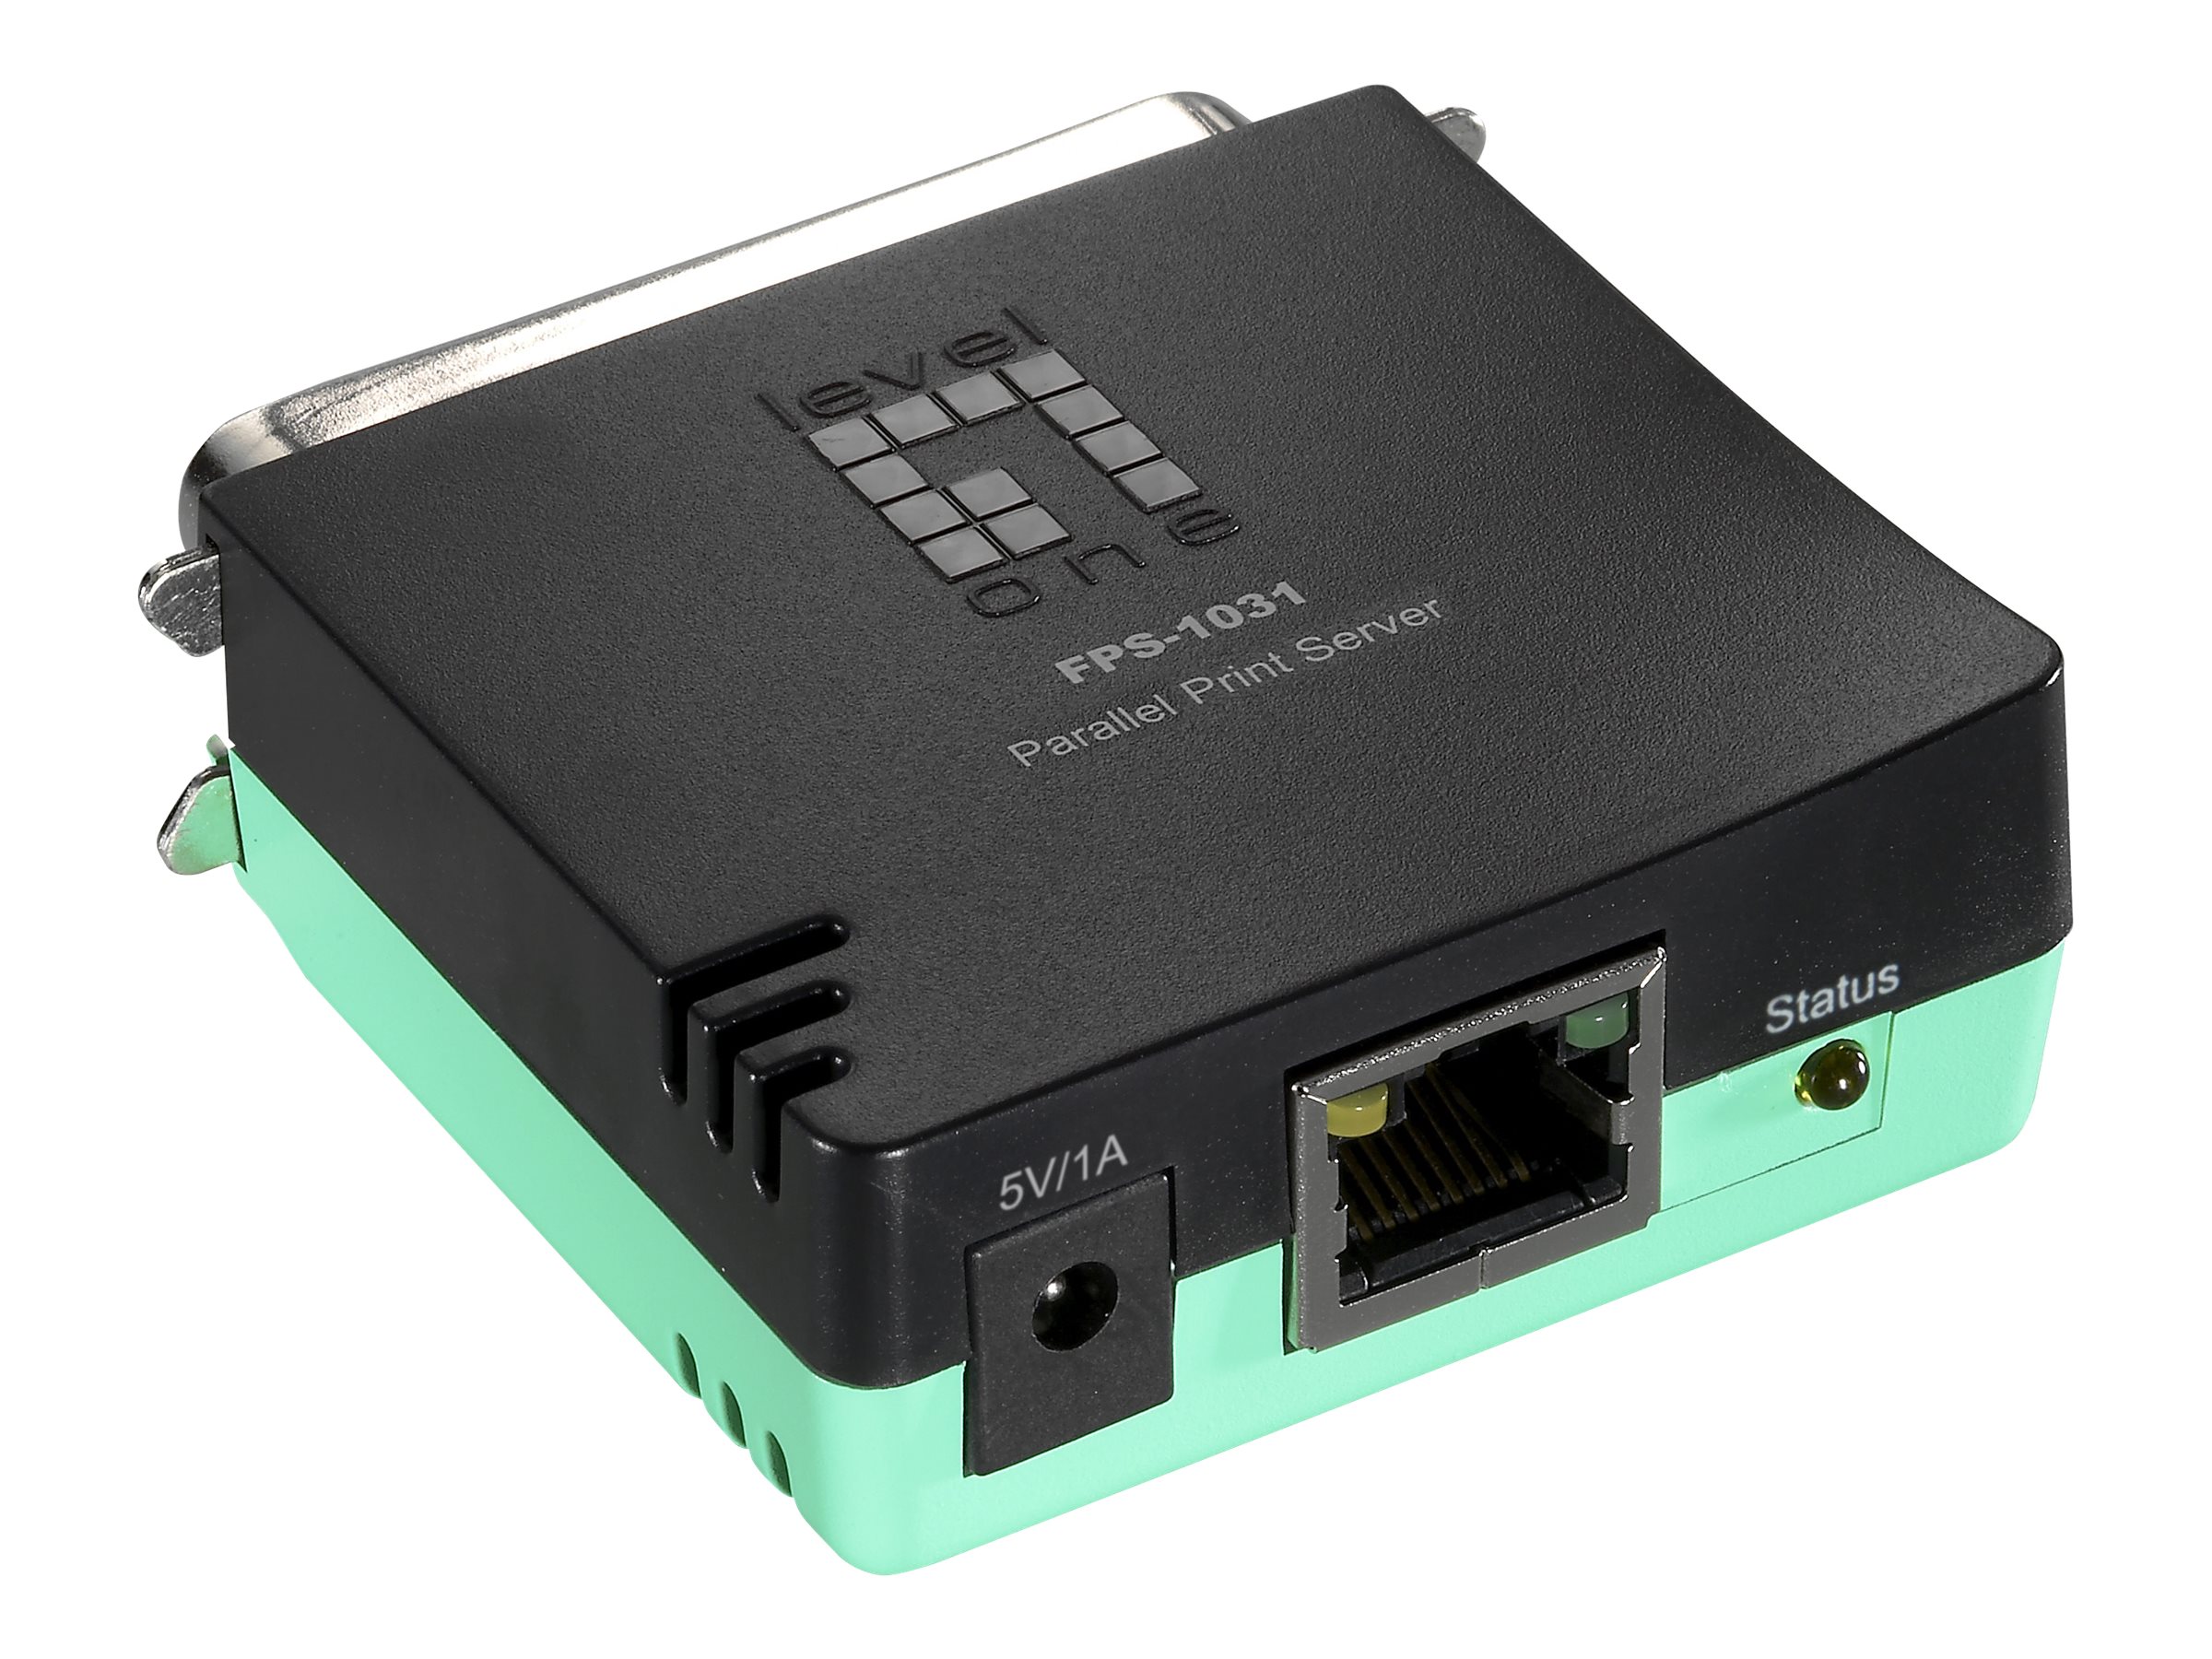 LevelOne FPS-1031 - Druckserver - parallel - 10/100 Ethernet